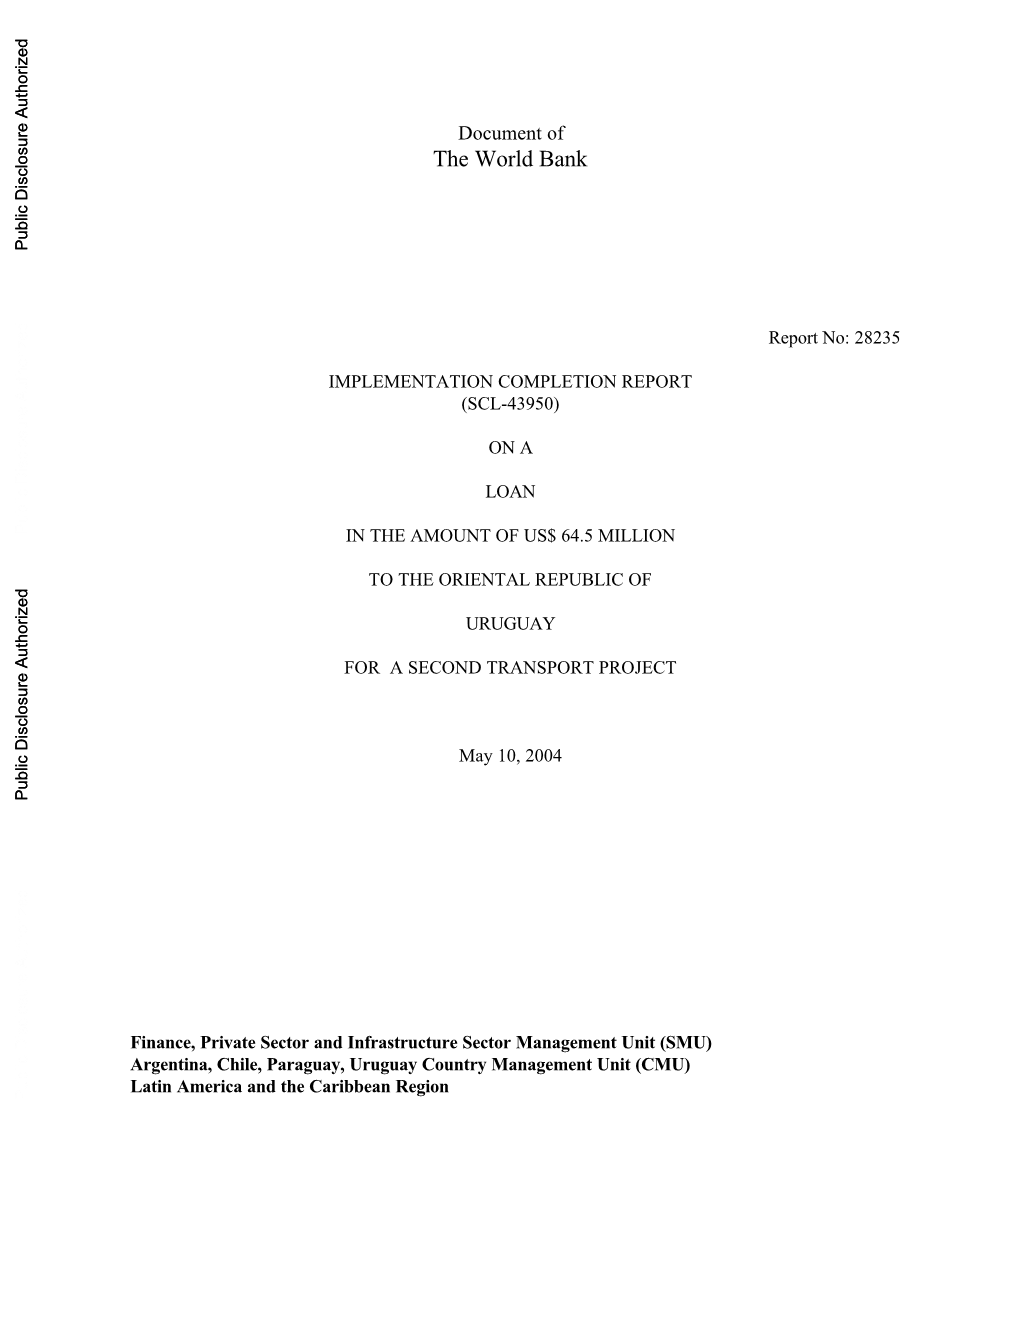 World Bank Document